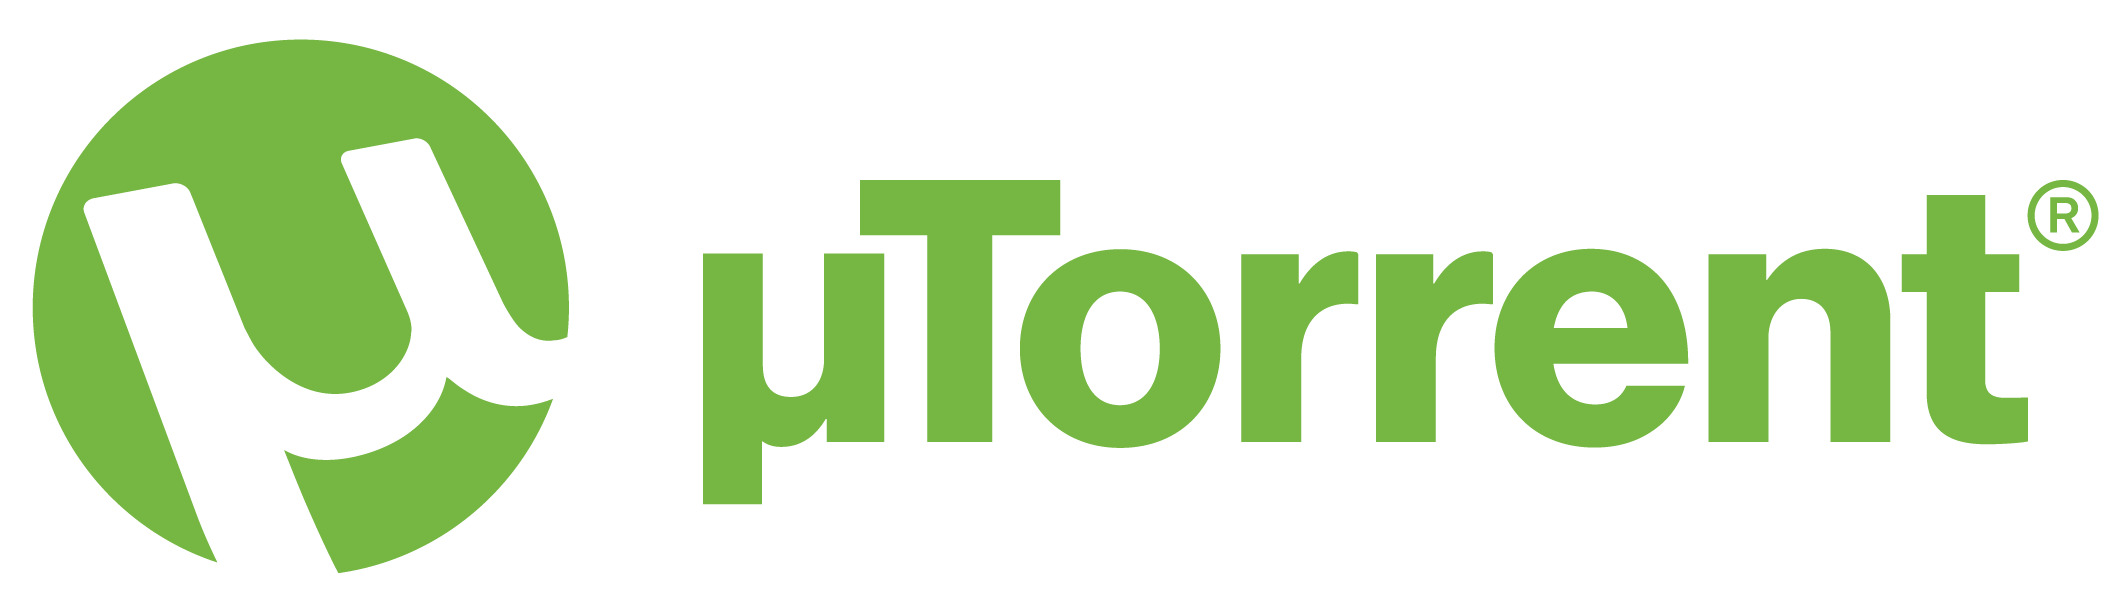 UTorrent Logo icons